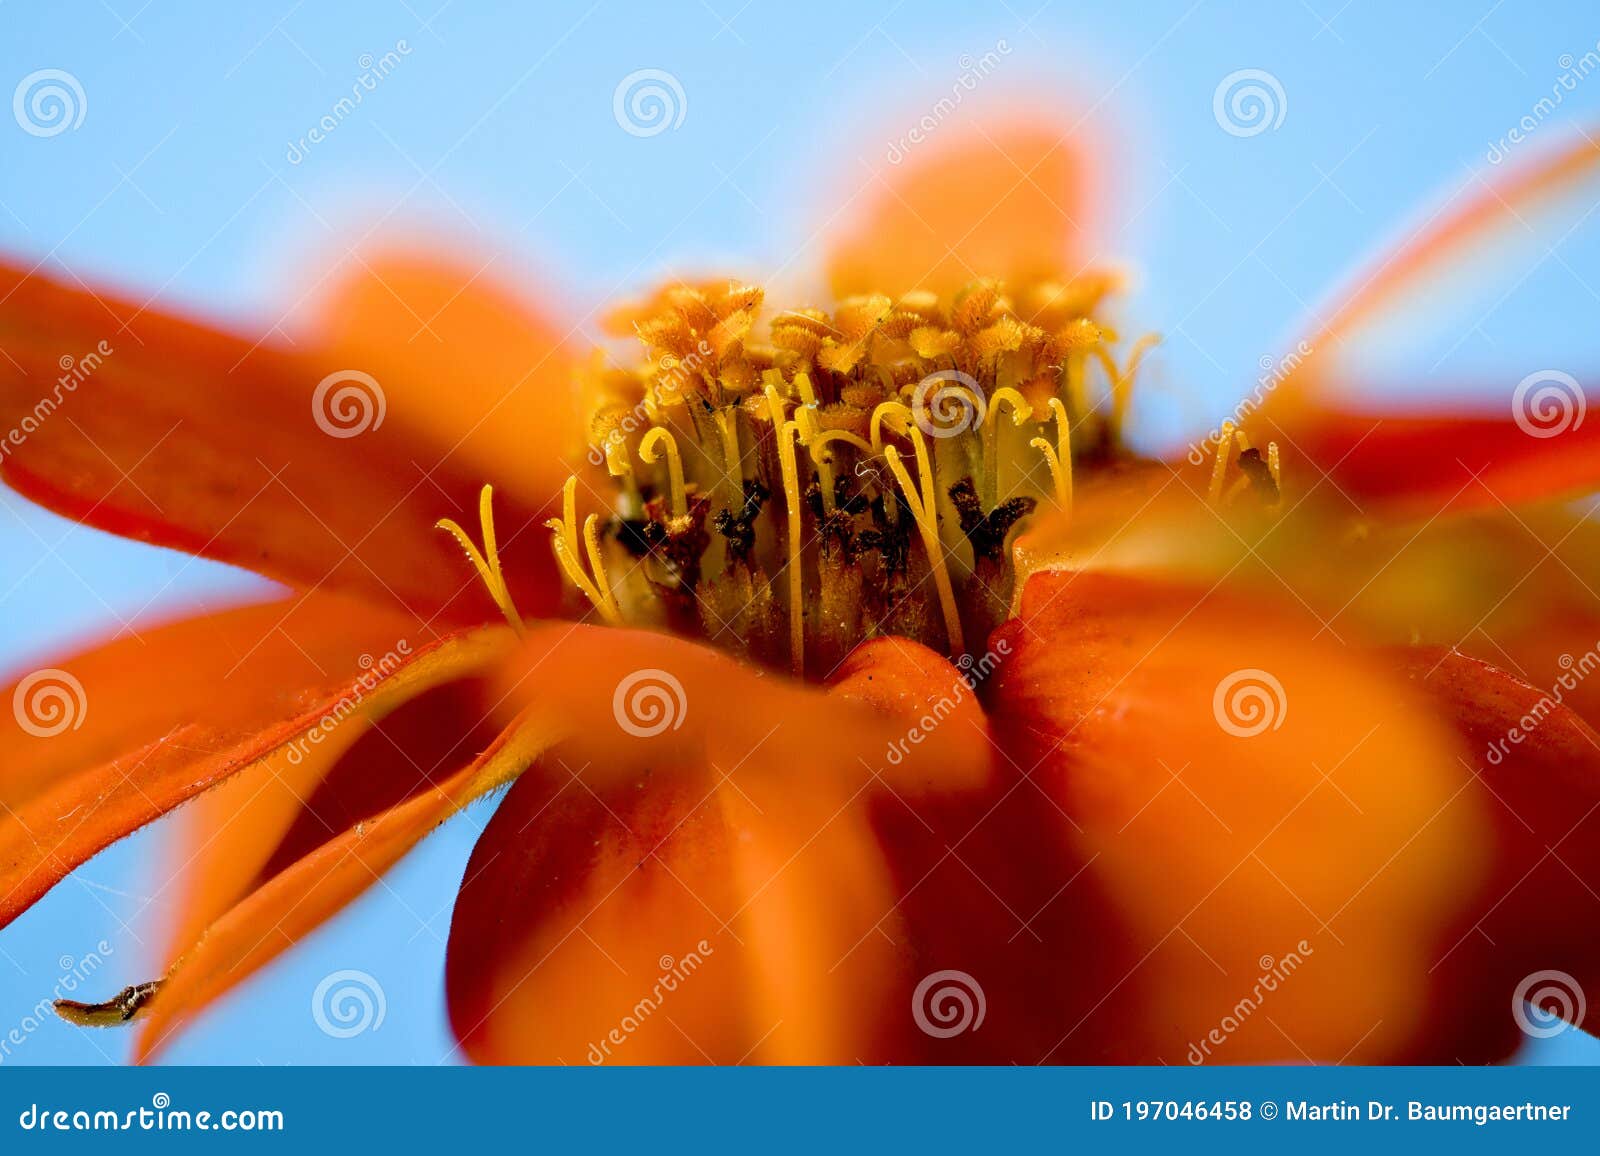 zinnia hybrid, orange-colored strain and blue sky